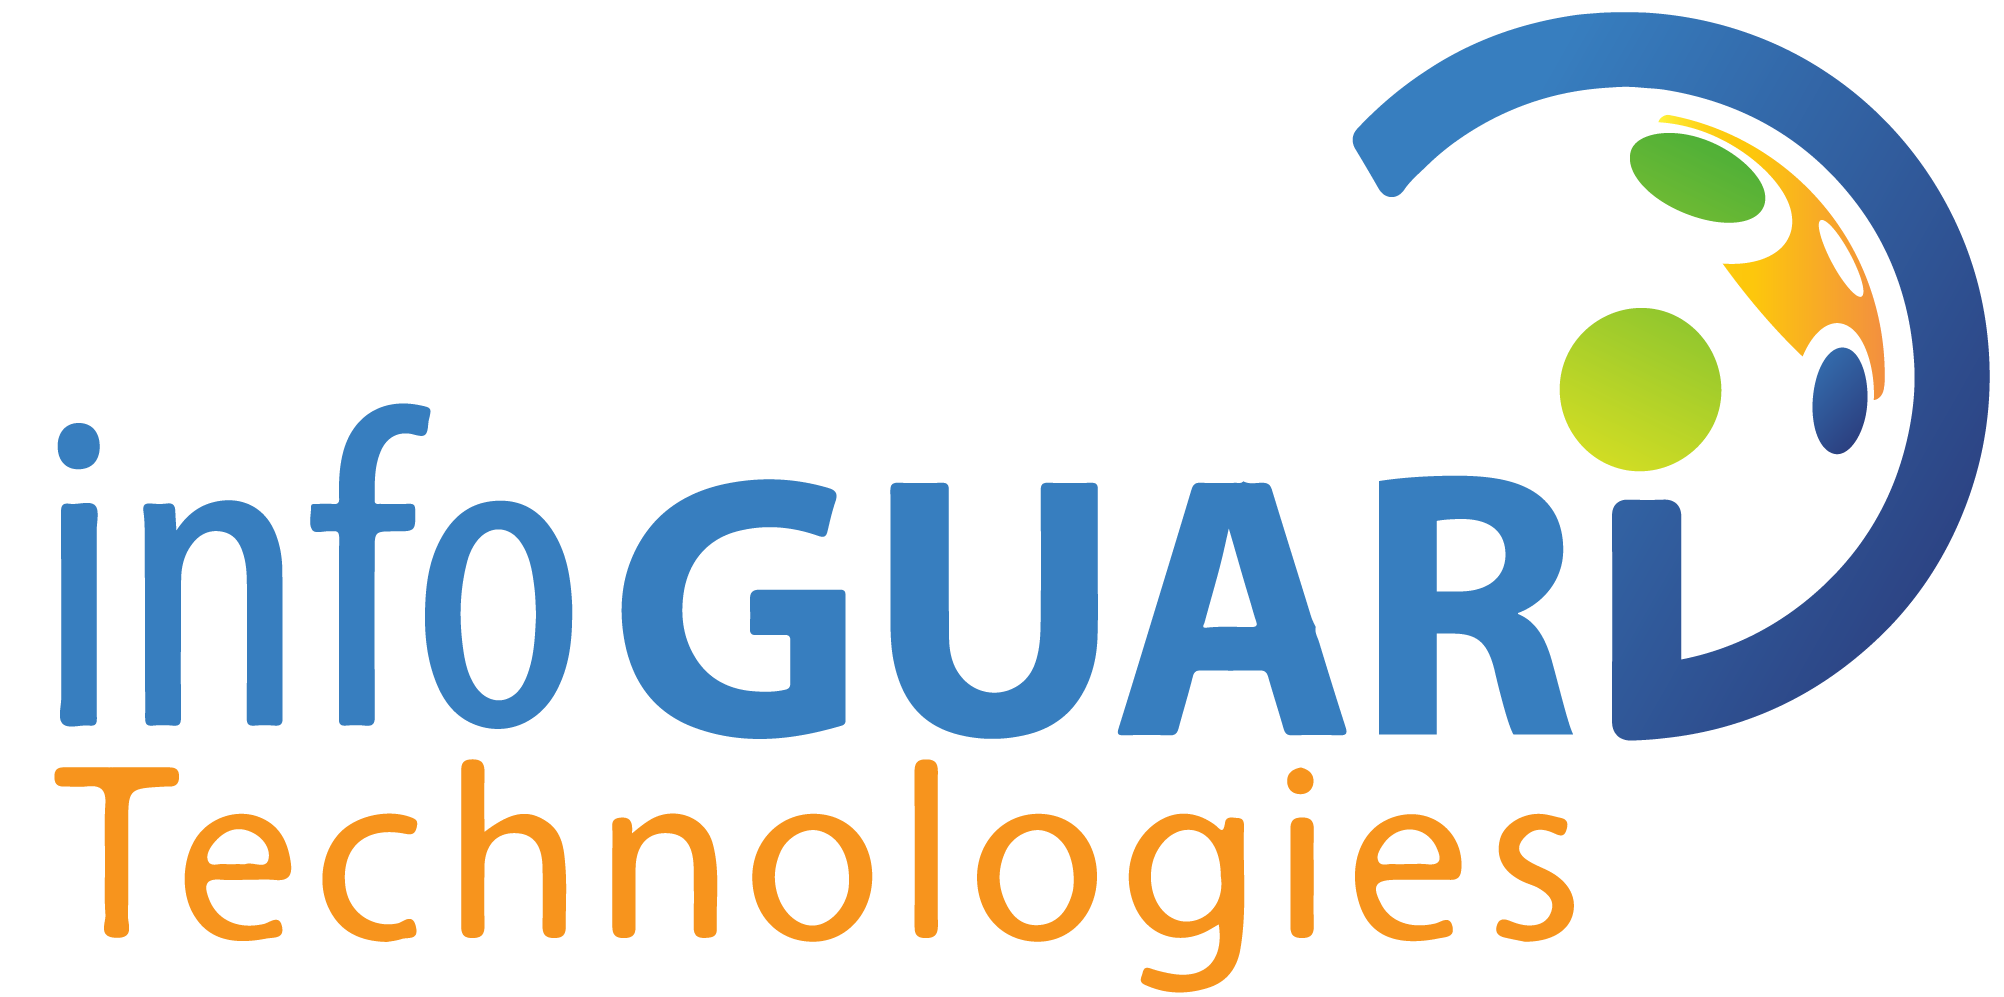 InfoGuard-logo